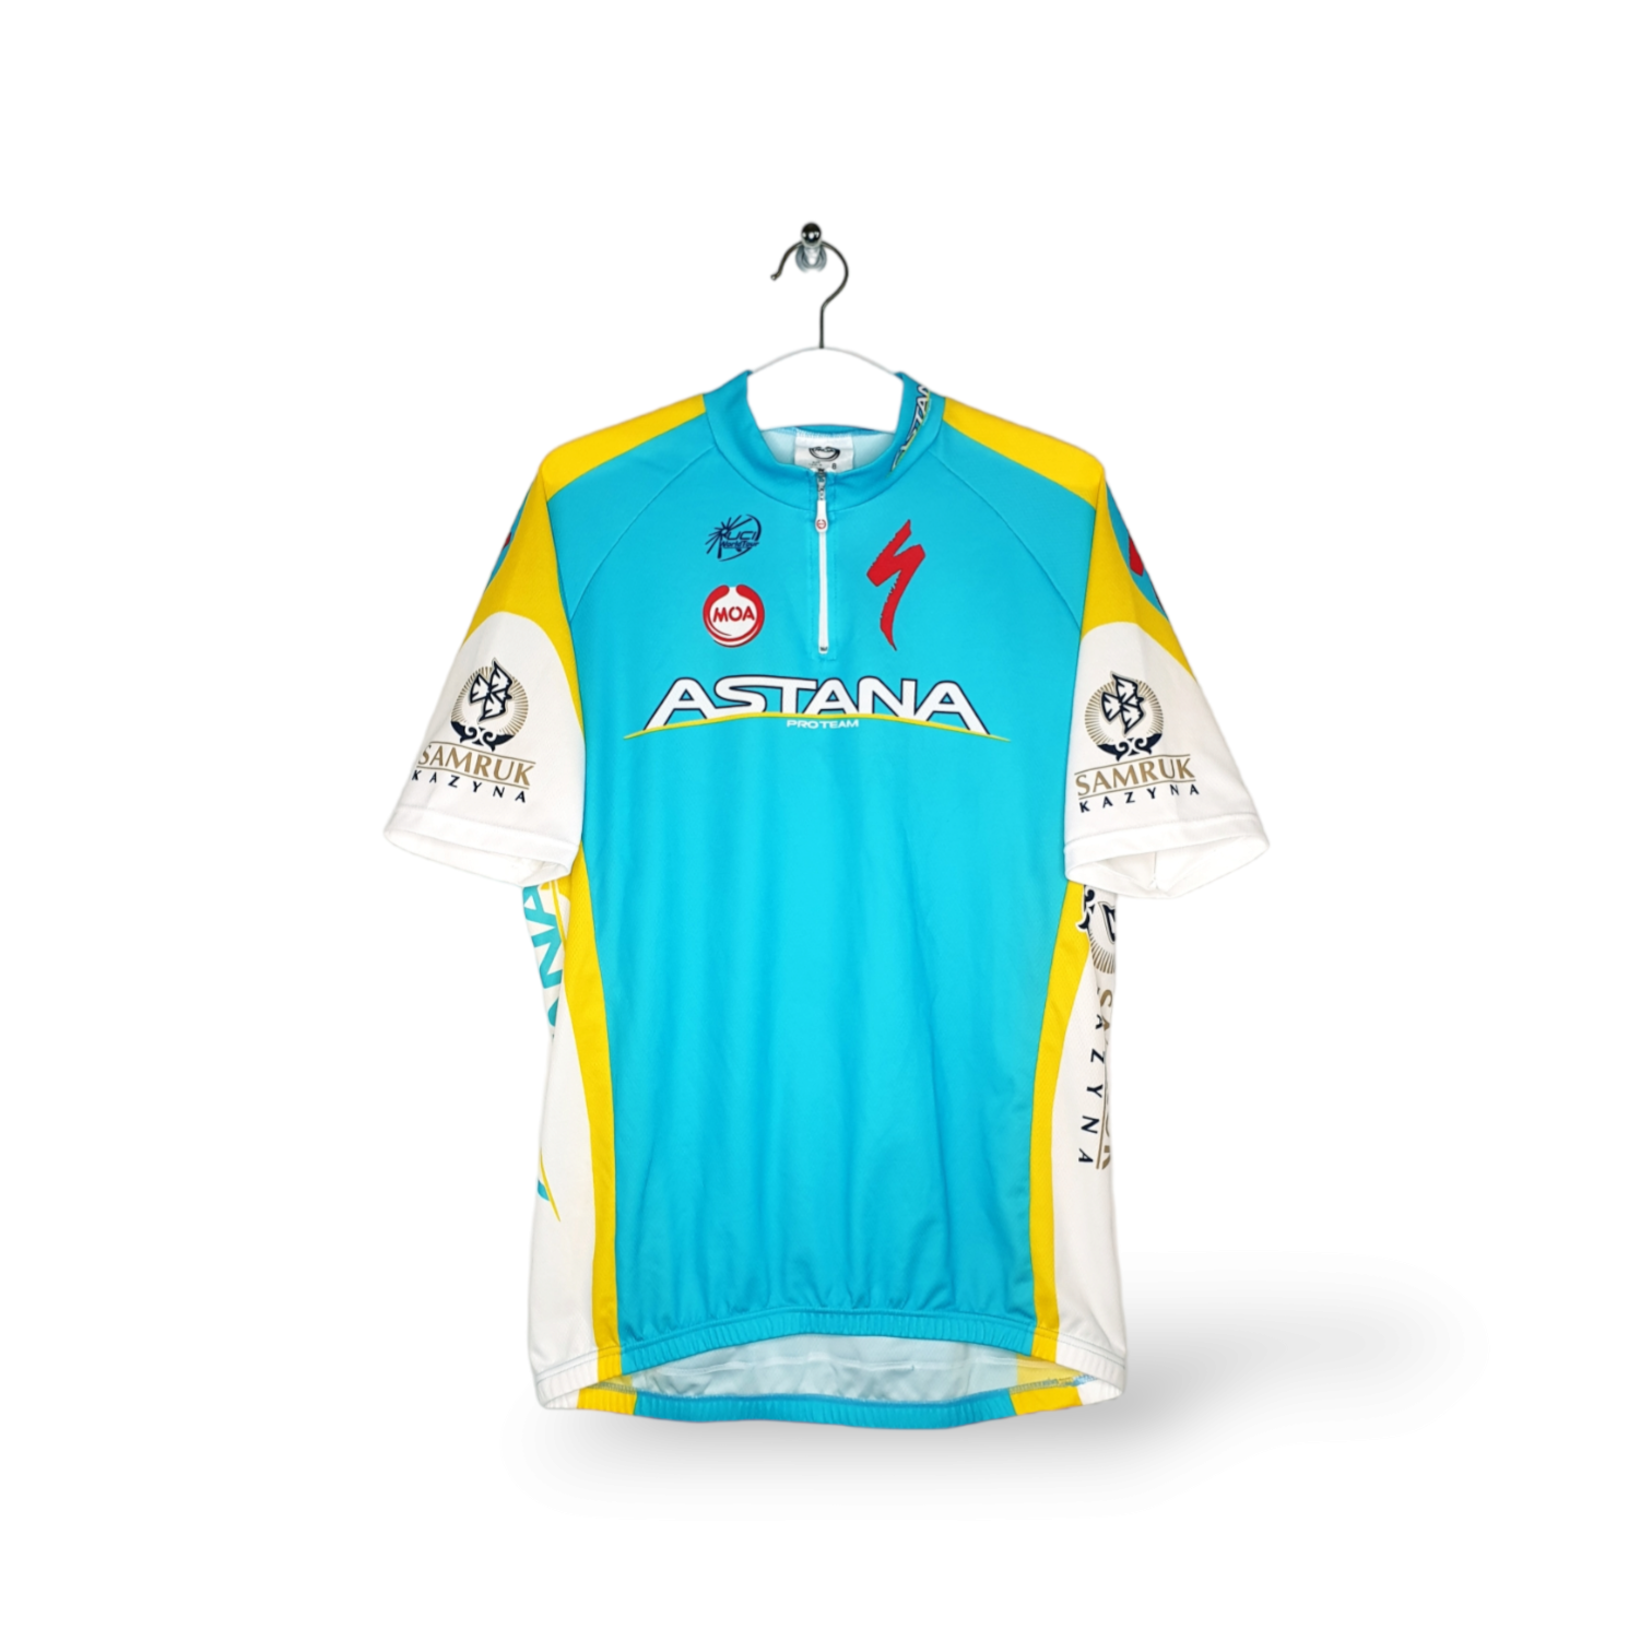 MOA cycling jersey Astana 2012 - We Love Sports